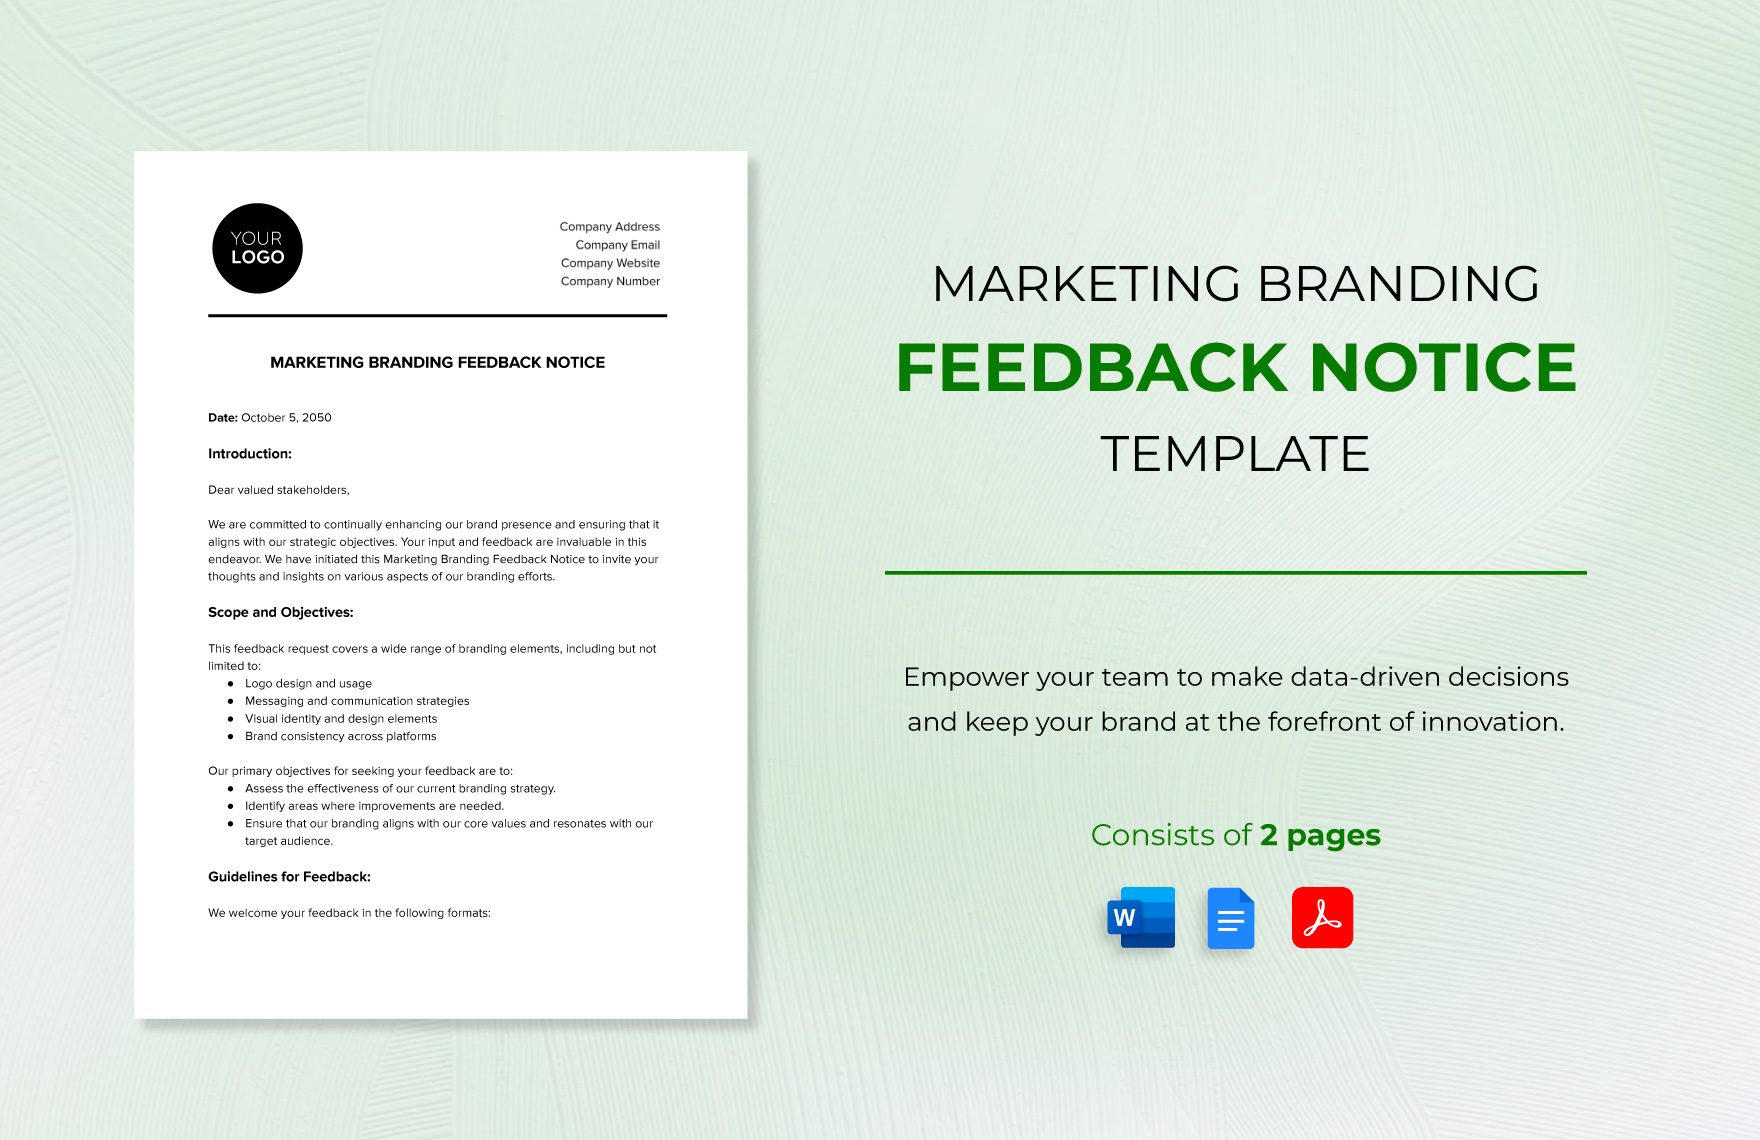 Marketing Branding Feedback Notice Template in Word, Google Docs, PDF